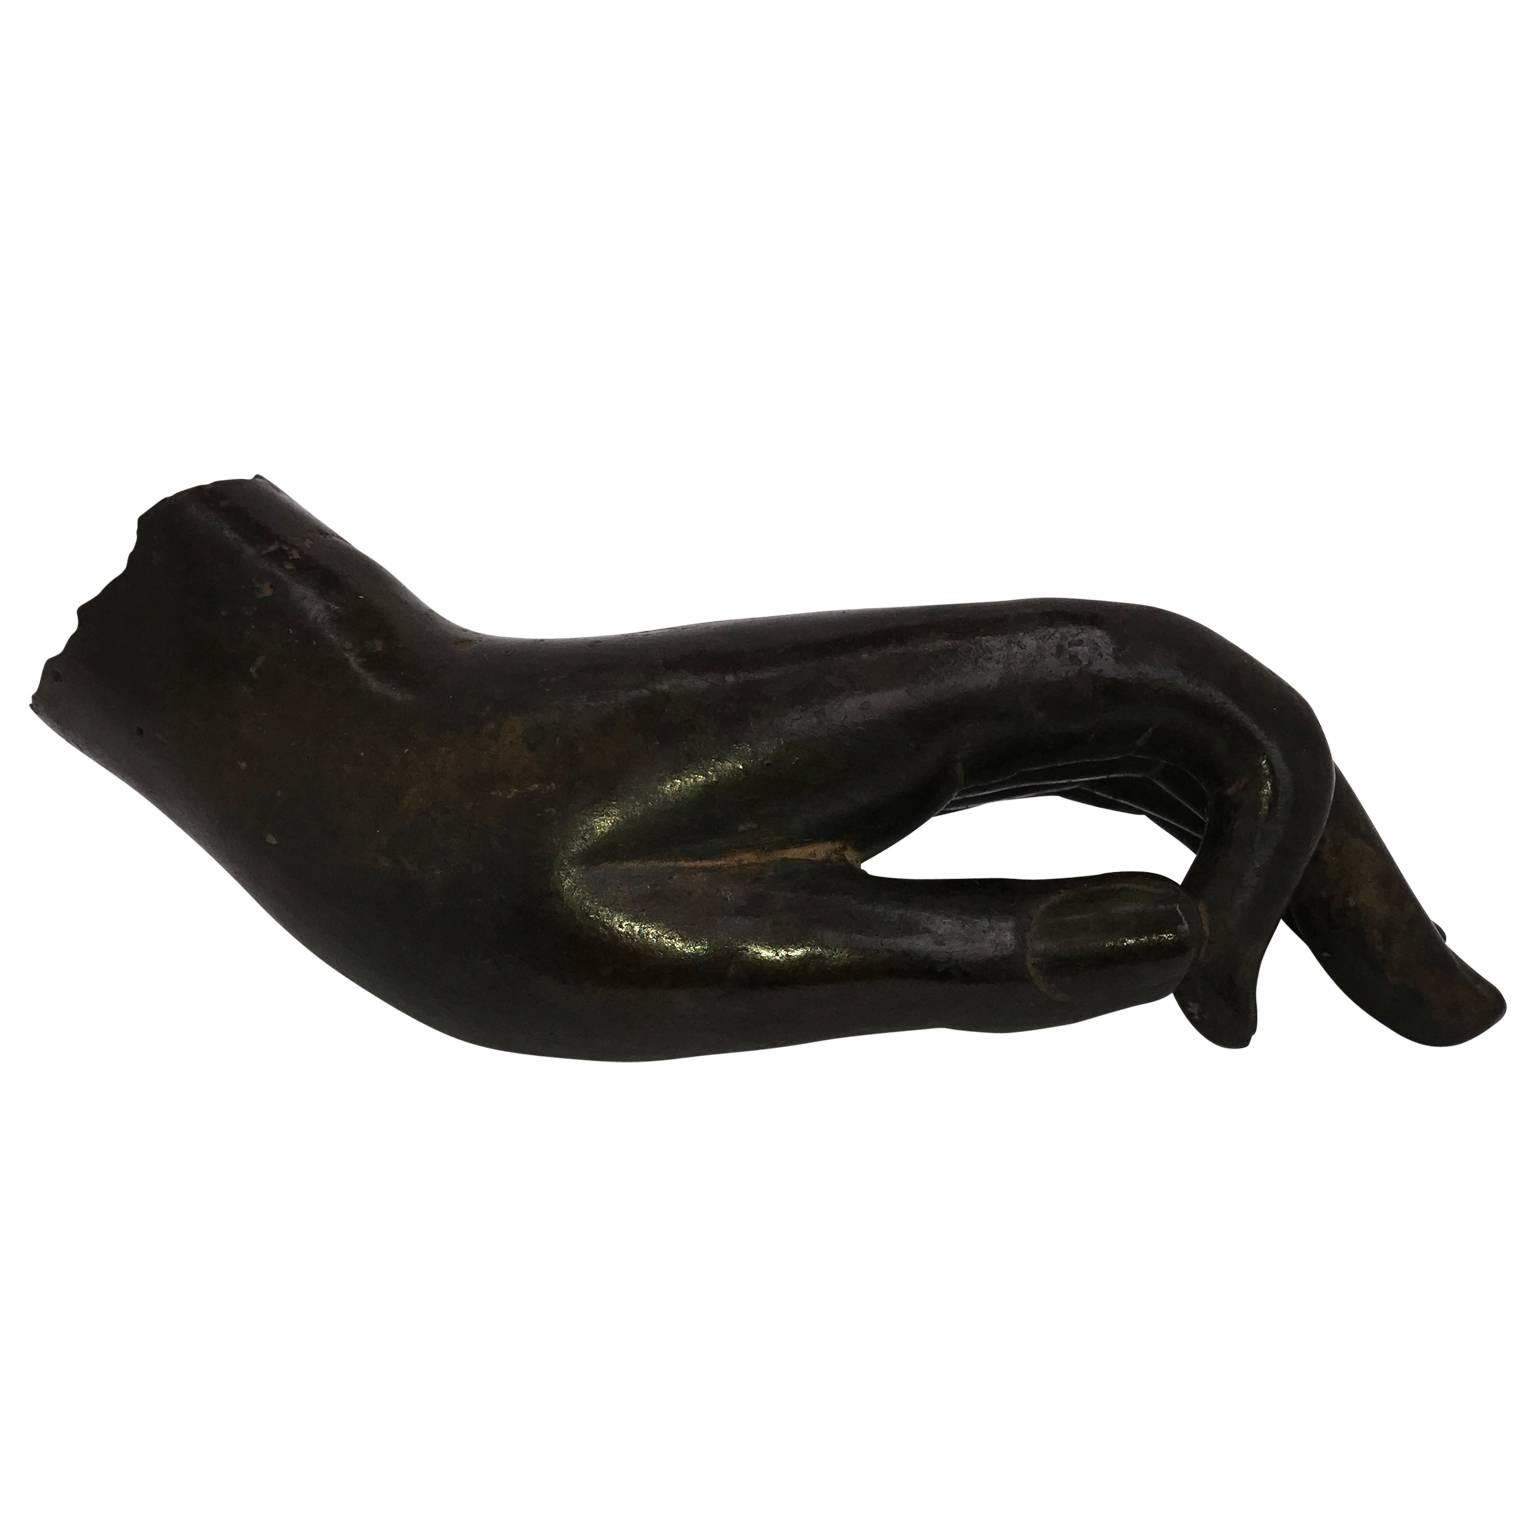 Large bronze buddha hand sculpture fragment